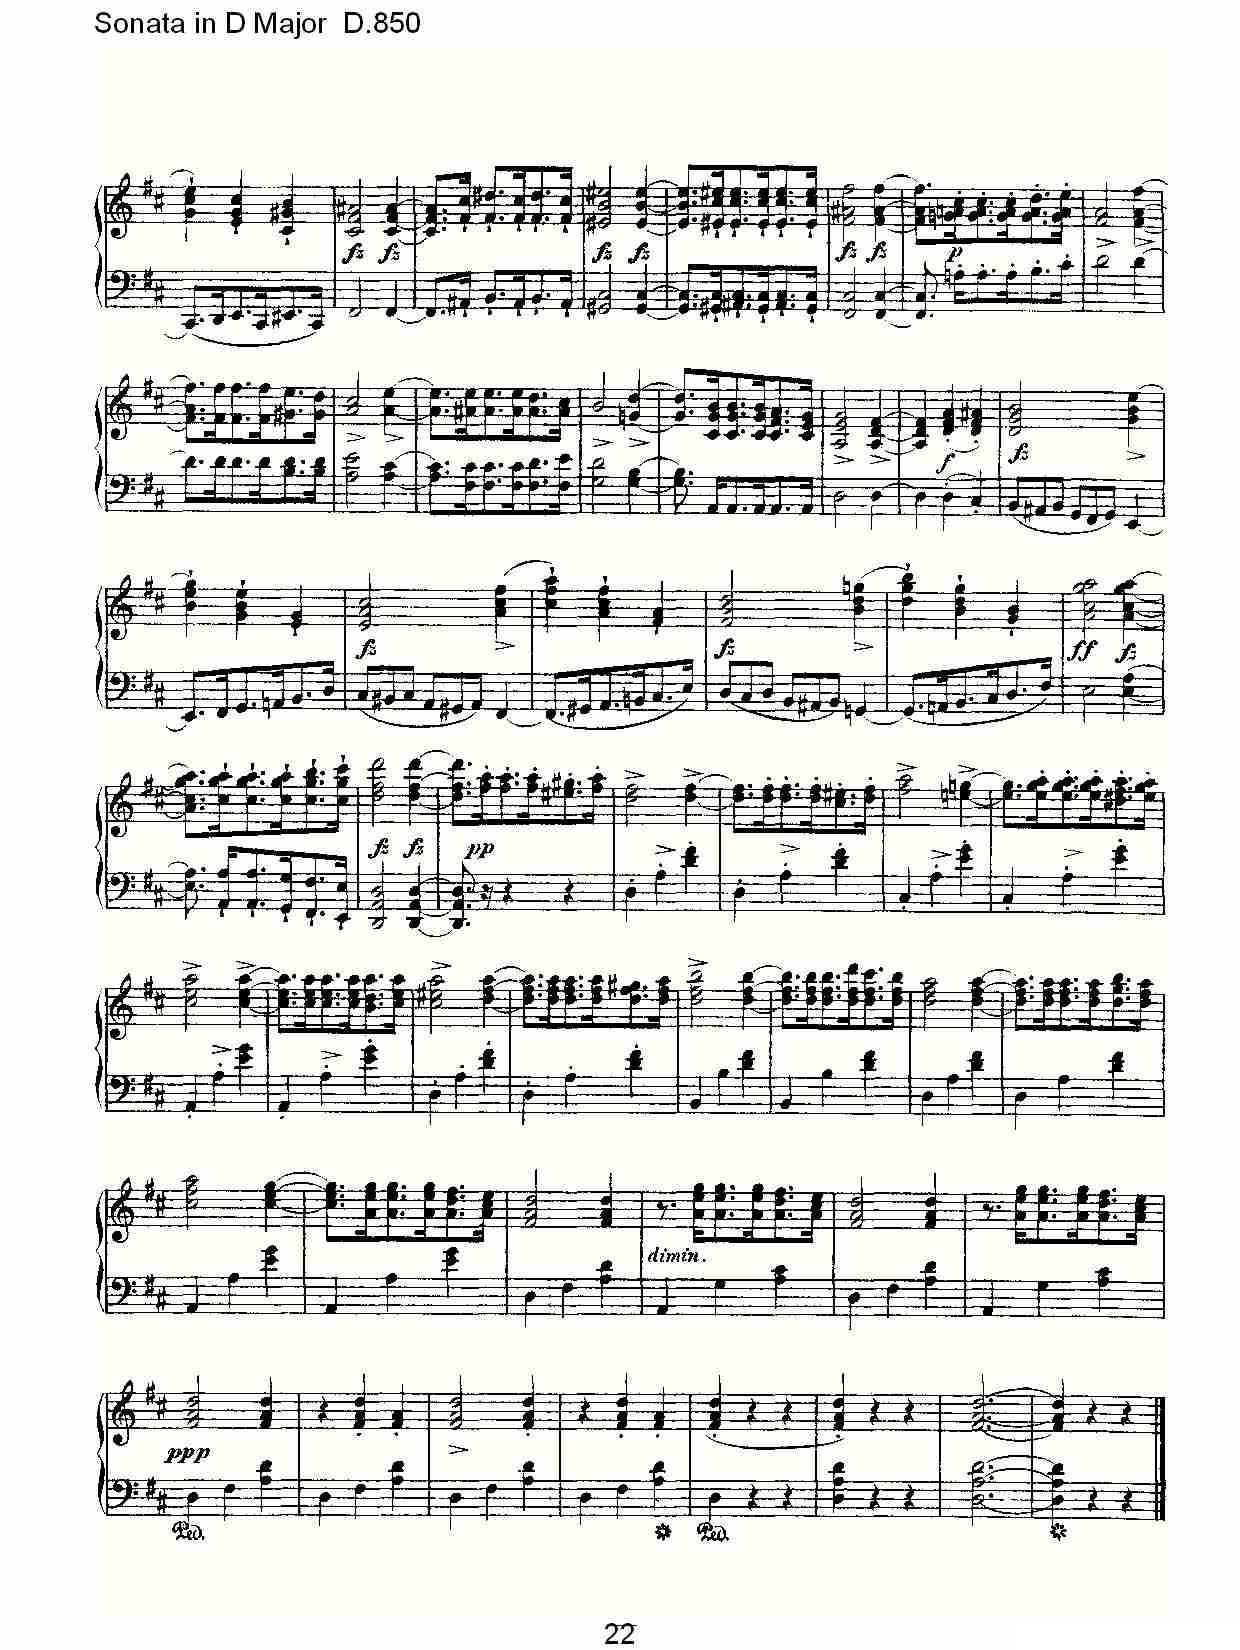 Sonata in D Major D.850（D大调奏鸣曲 D.850）钢琴曲谱（图22）